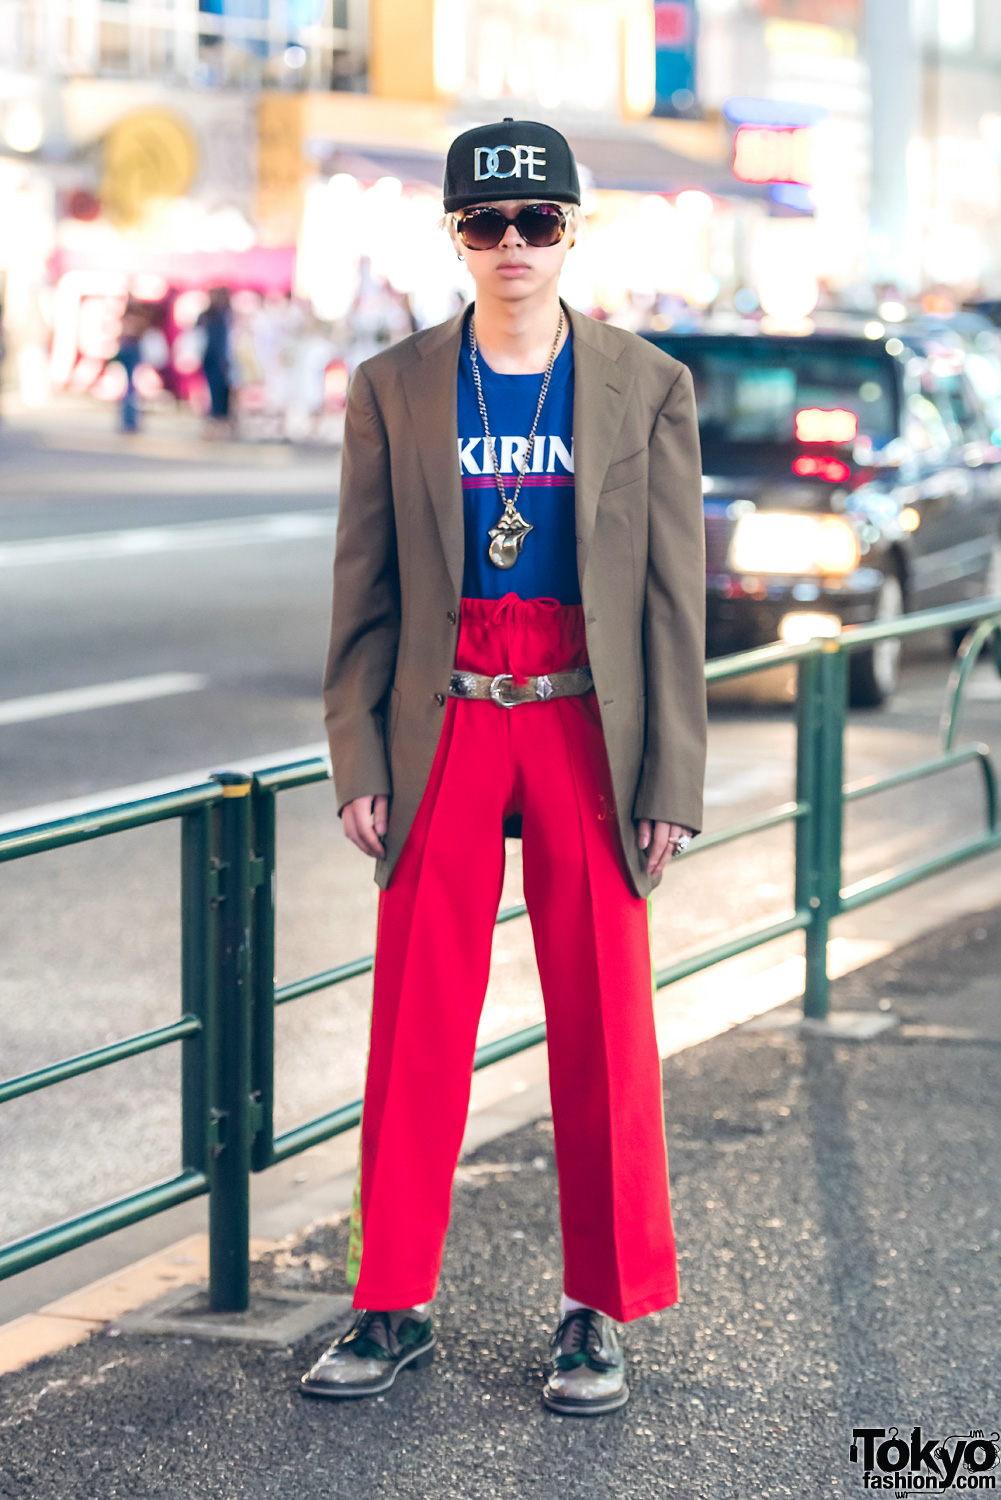 Harajuku Guy in Vintage Streetwear Style w/ Kirin, Christian Dior & DOPE Hat